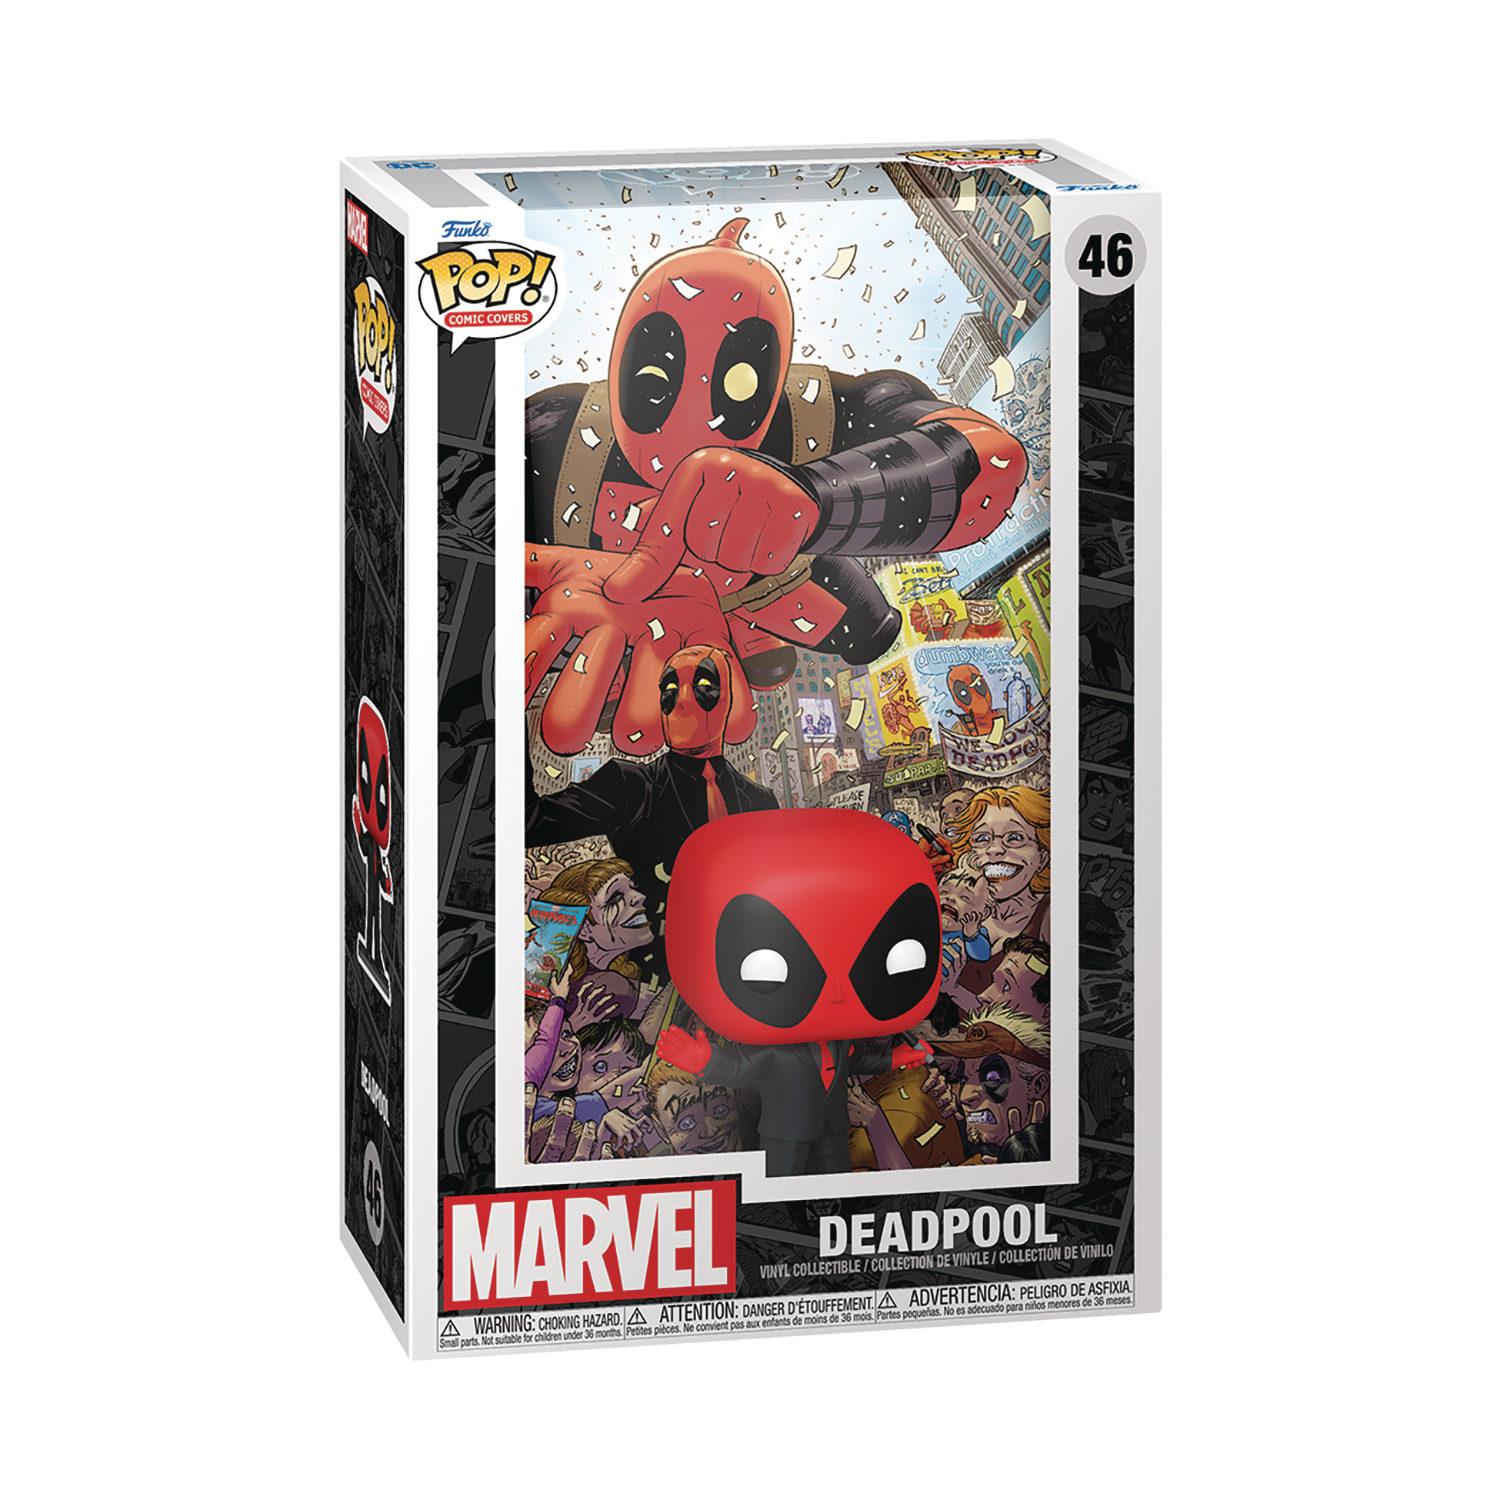 Deadpool (2015) #1 Deadpool In Black Suit Funko Pop! Comic Cover Figure #46 With Case